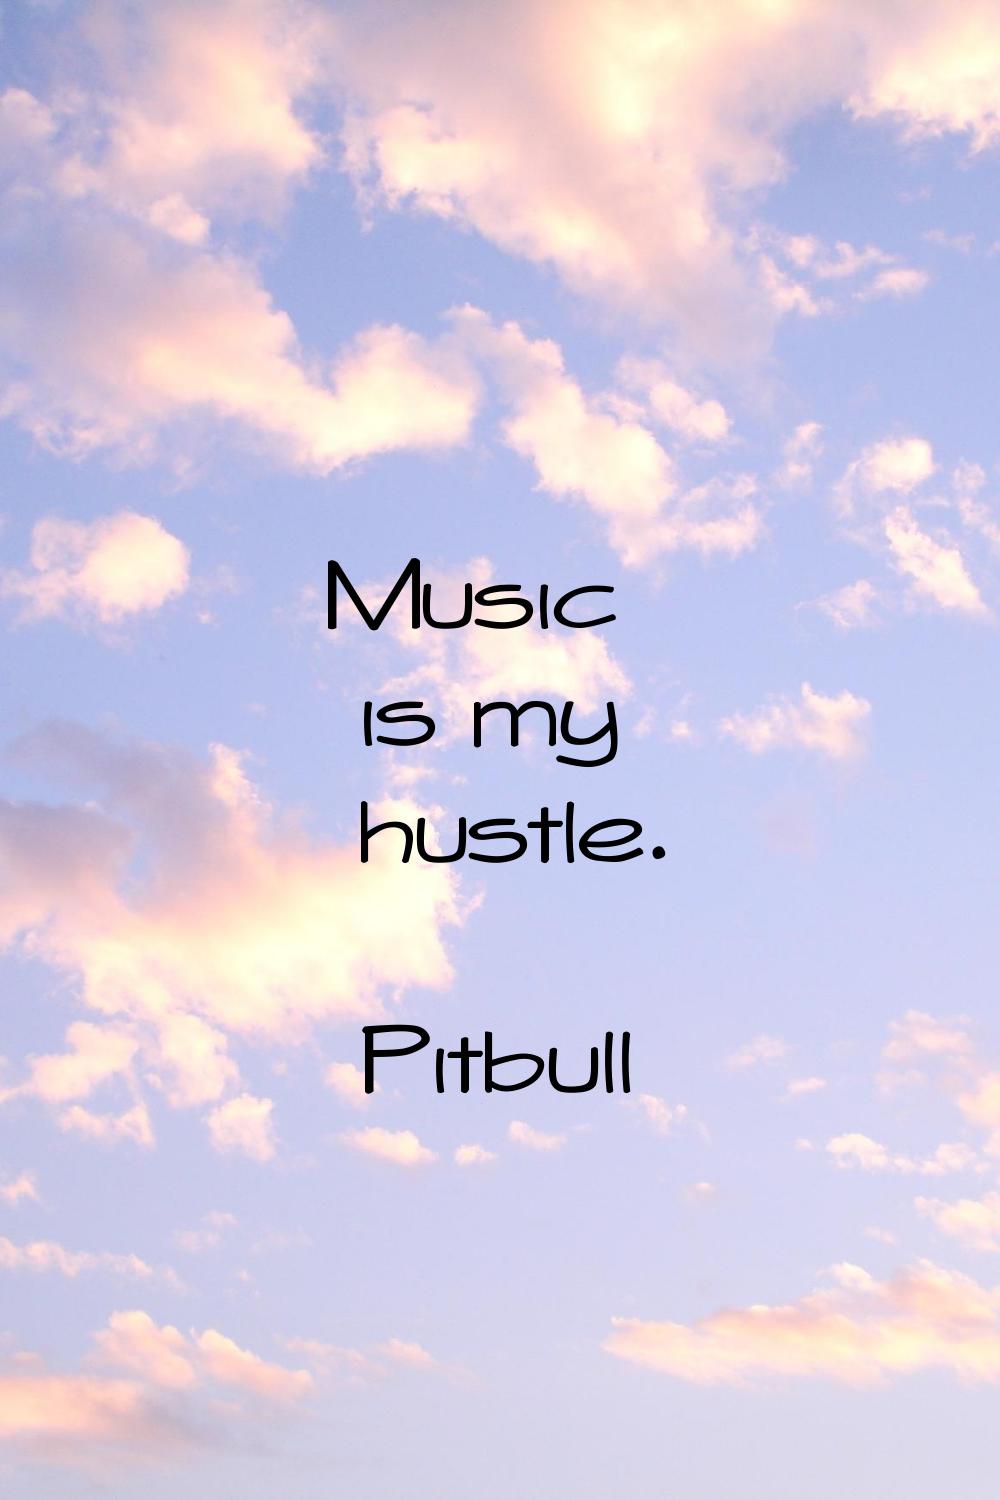 Music is my hustle.